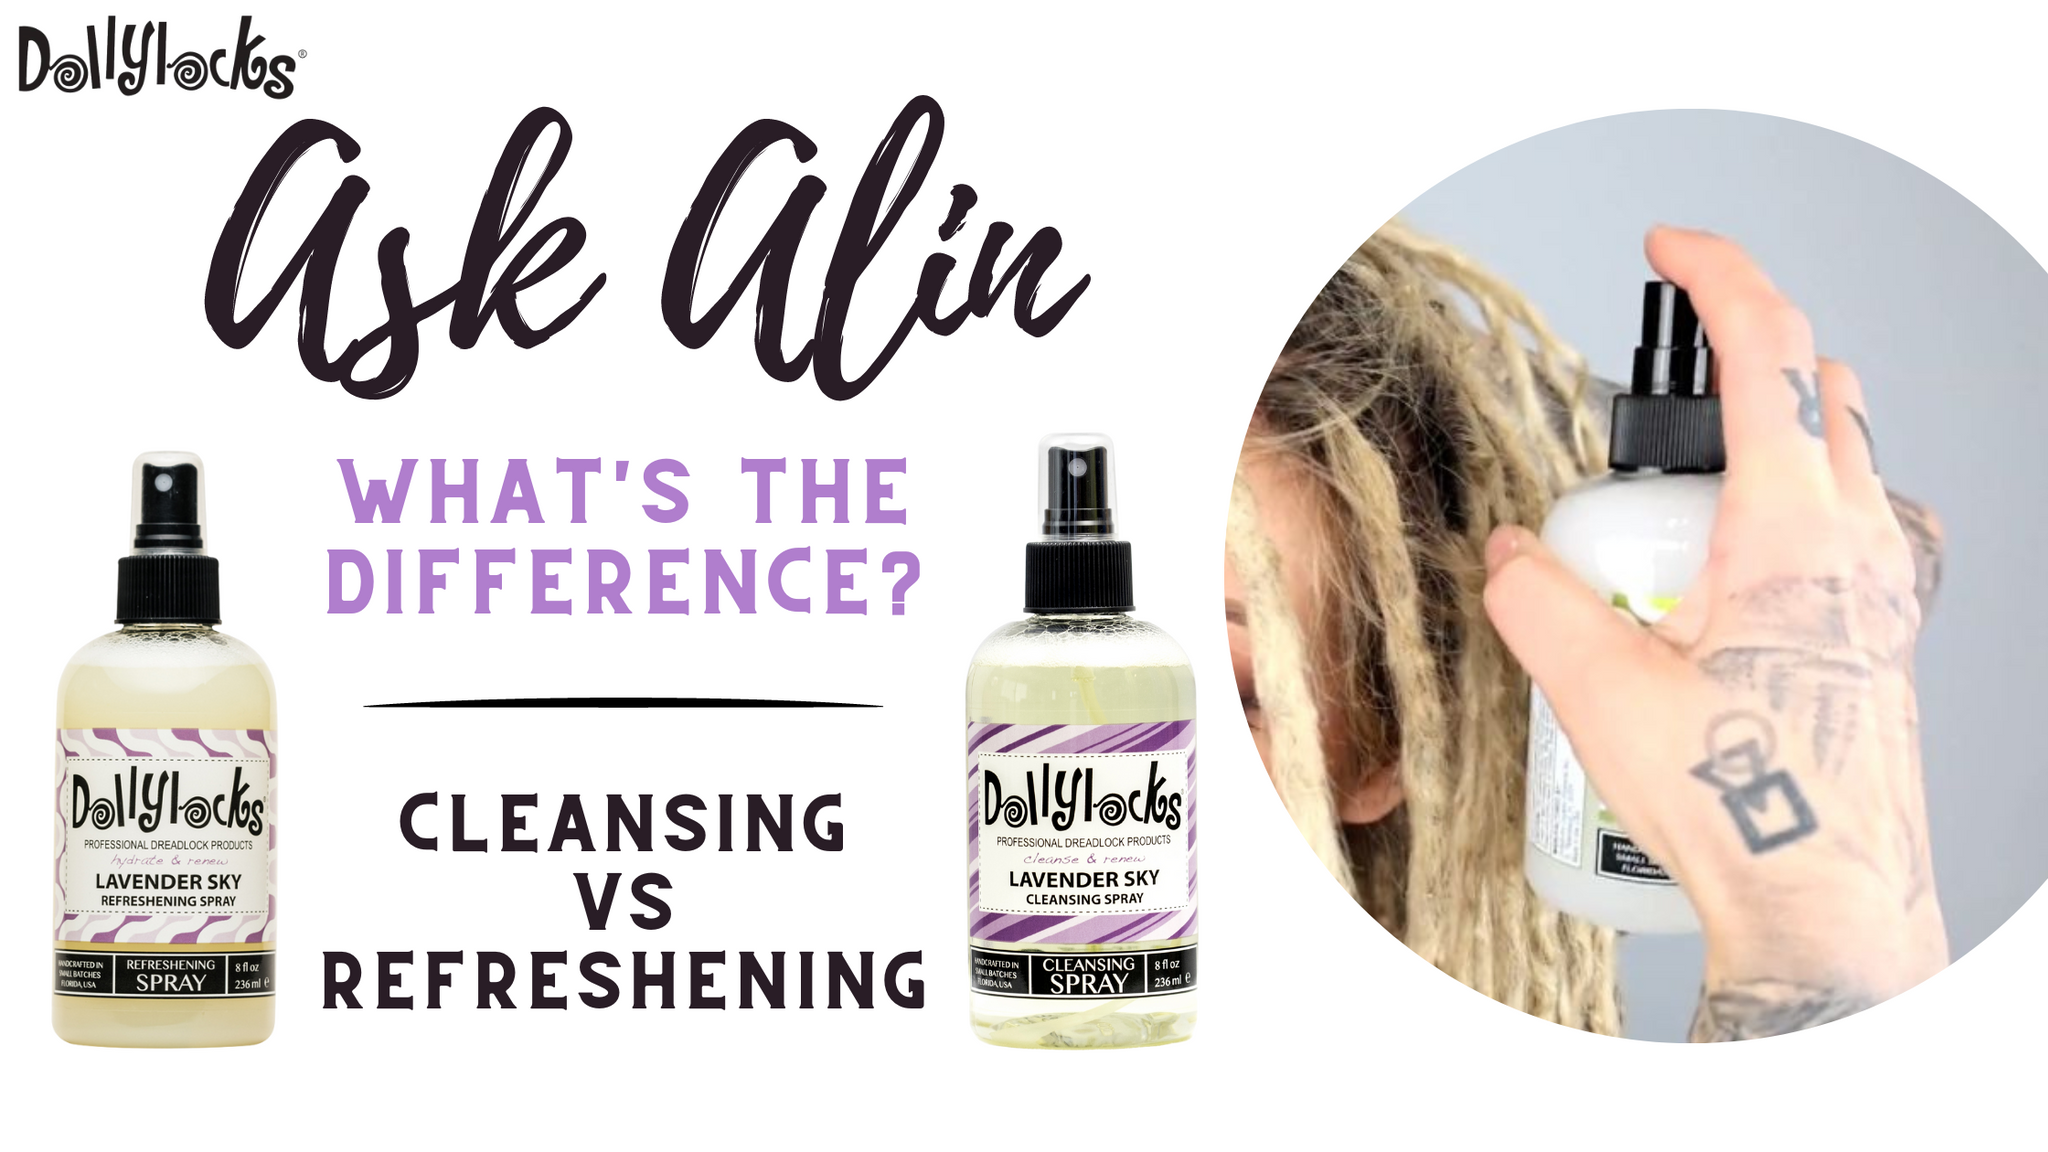 Ask Alin - Cleansing vs Refreshening